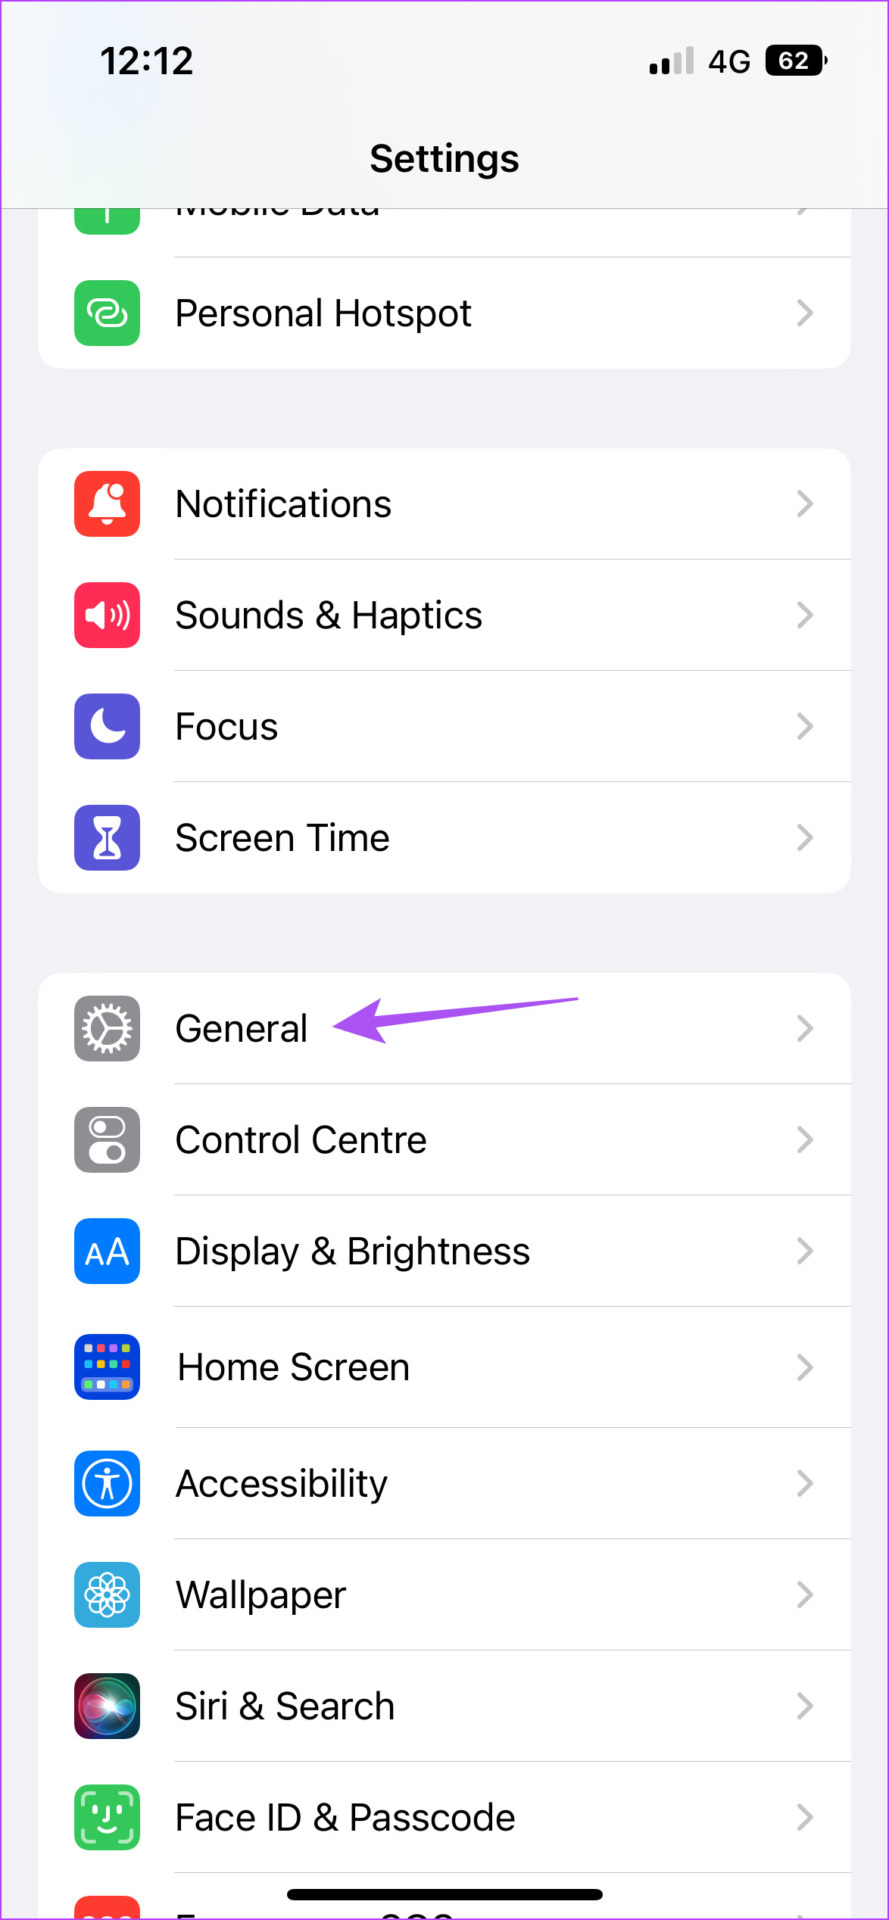 10 Ways to Fix Flickering Screen on iPhone - 89